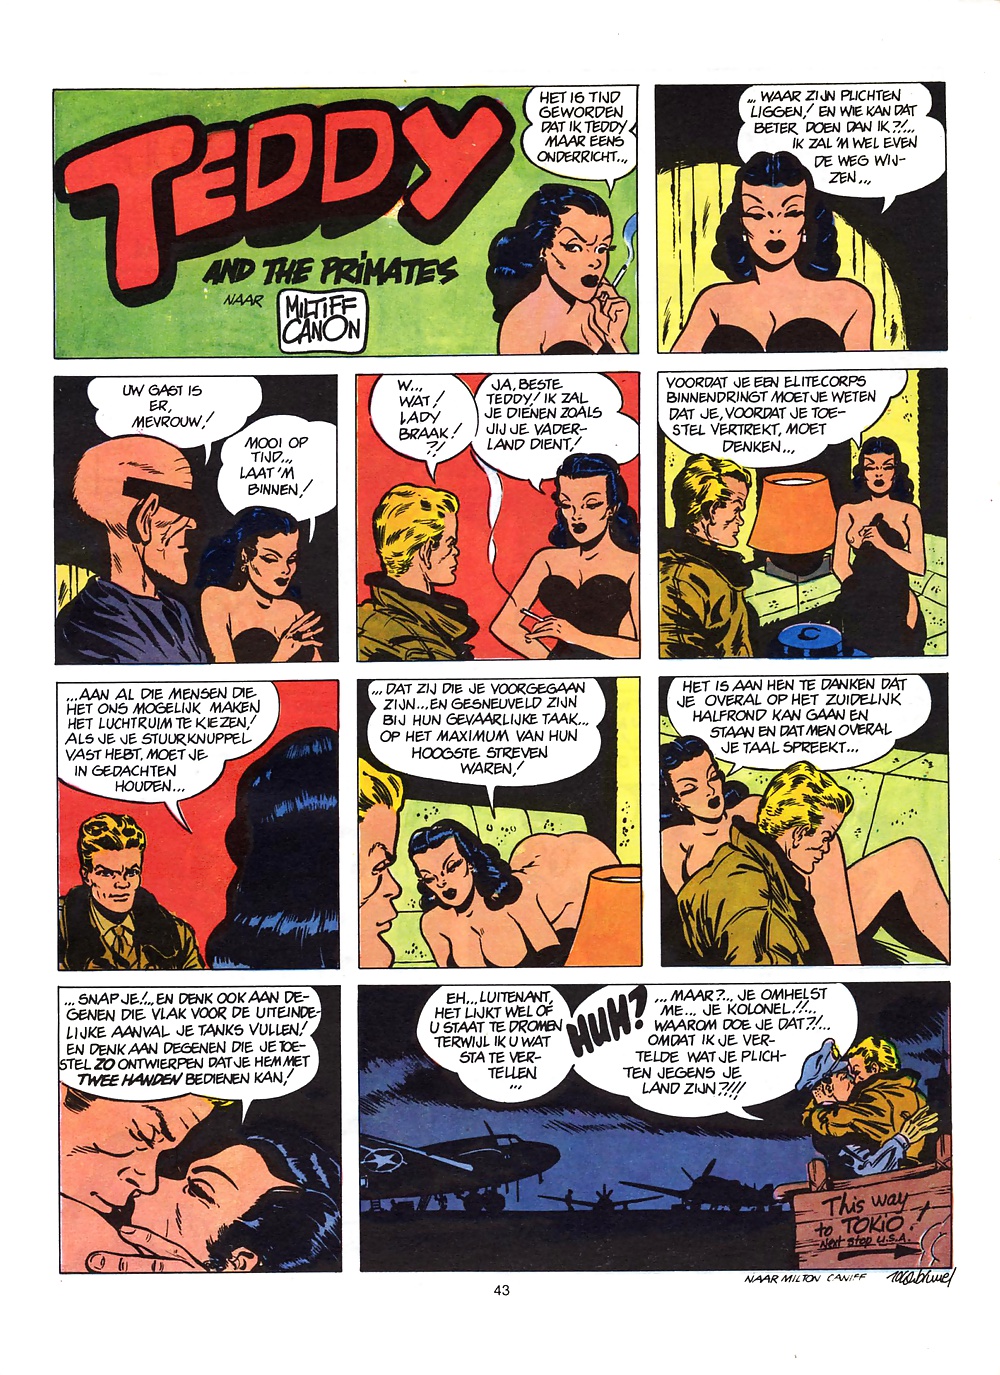 Vintage comic - Strip-Tease 2 #41027169